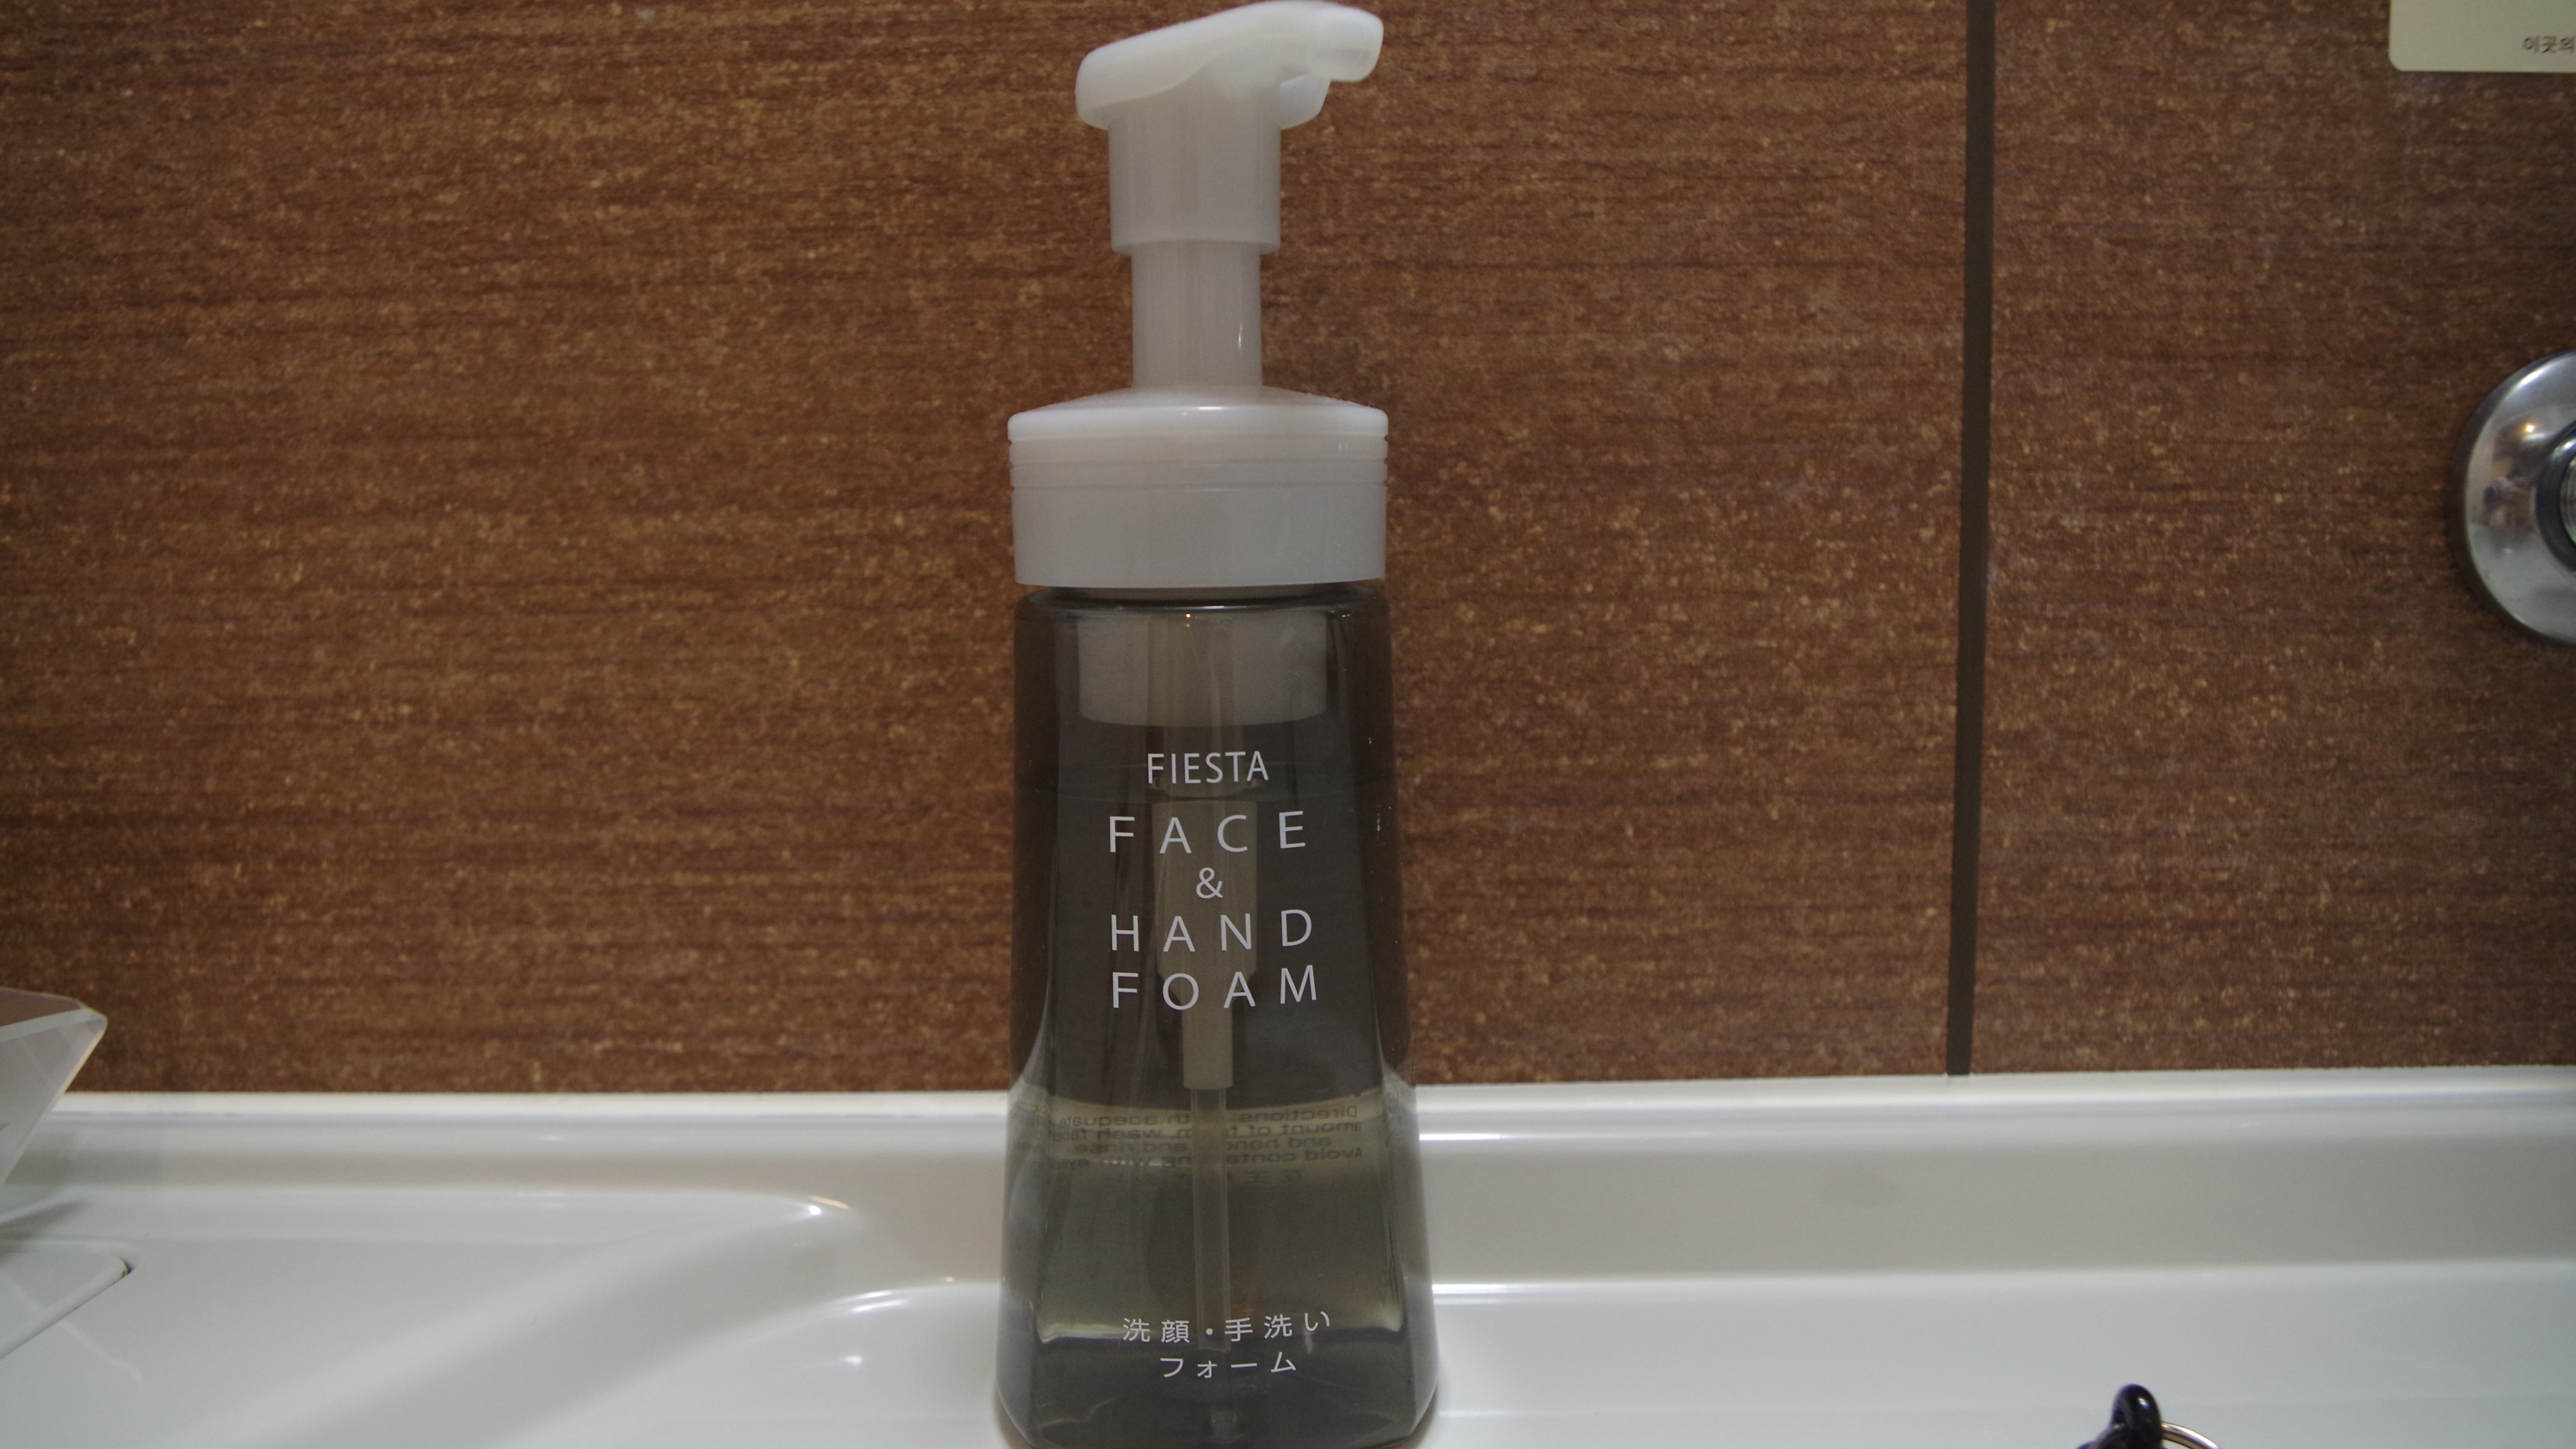 [Semua kamar lengkap] Dapat digunakan tidak hanya untuk mencuci tangan dan mencuci muka, tetapi juga sebagai busa cukur.